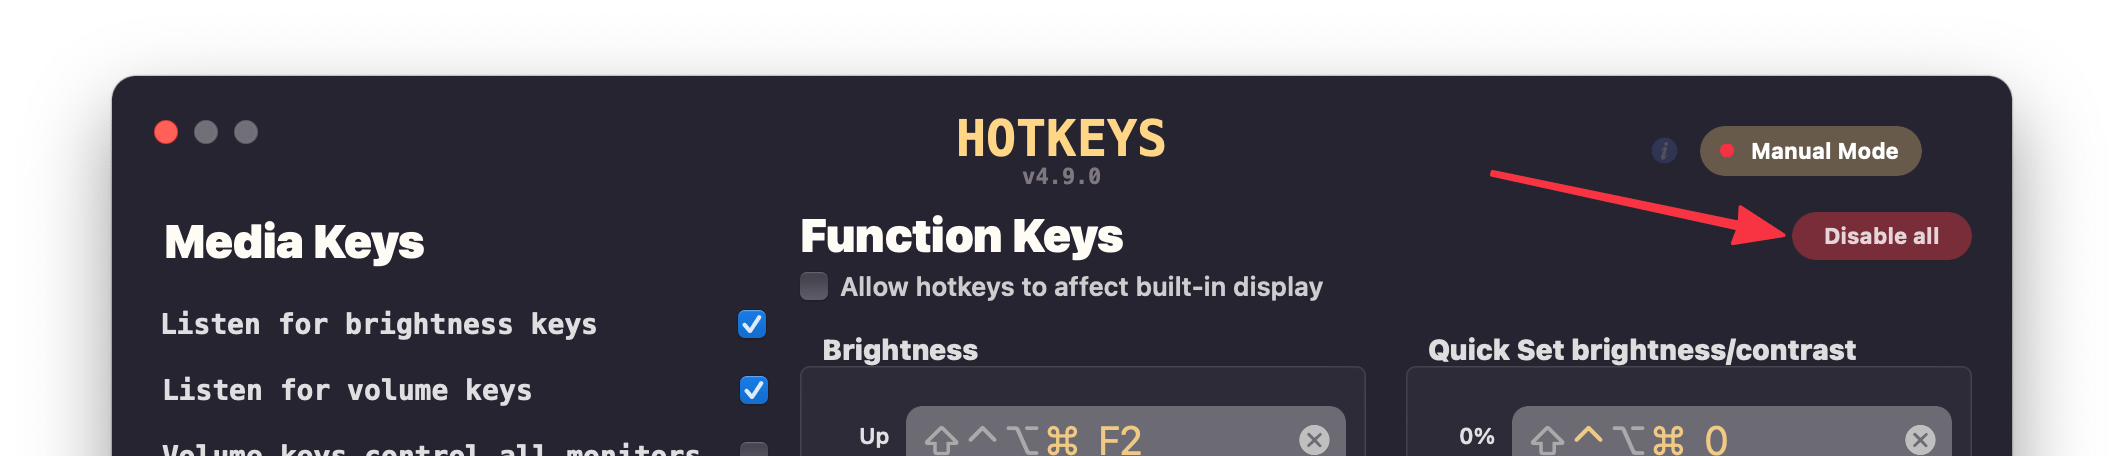 disable all hotkeys button